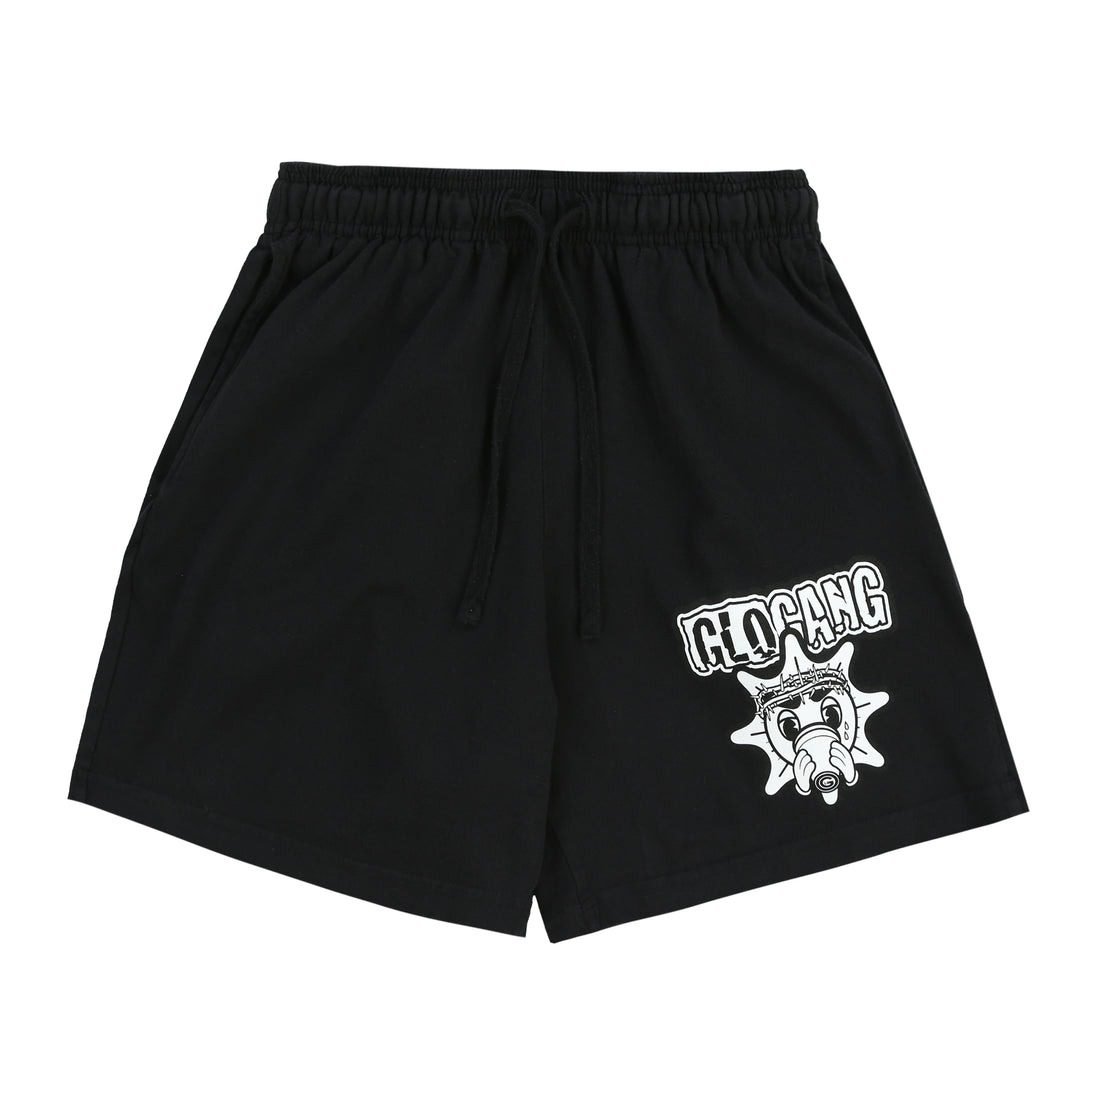 The Men Glo Gang Sun Font Shorts Black